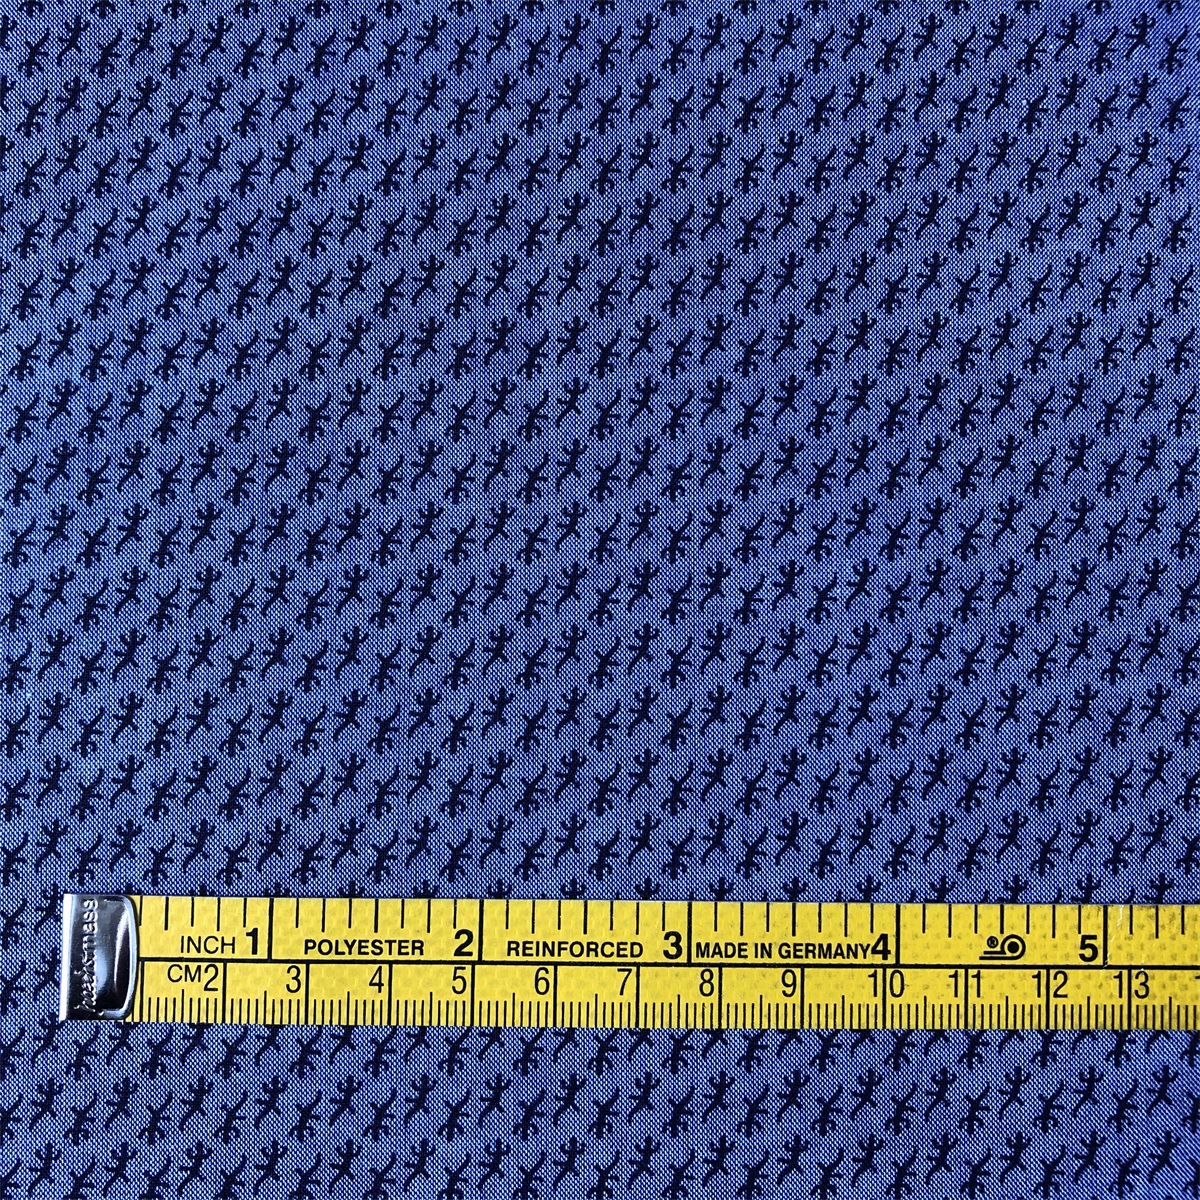 China soft breathable cotton printed chambray woven shirts fabric for mens casual shirts